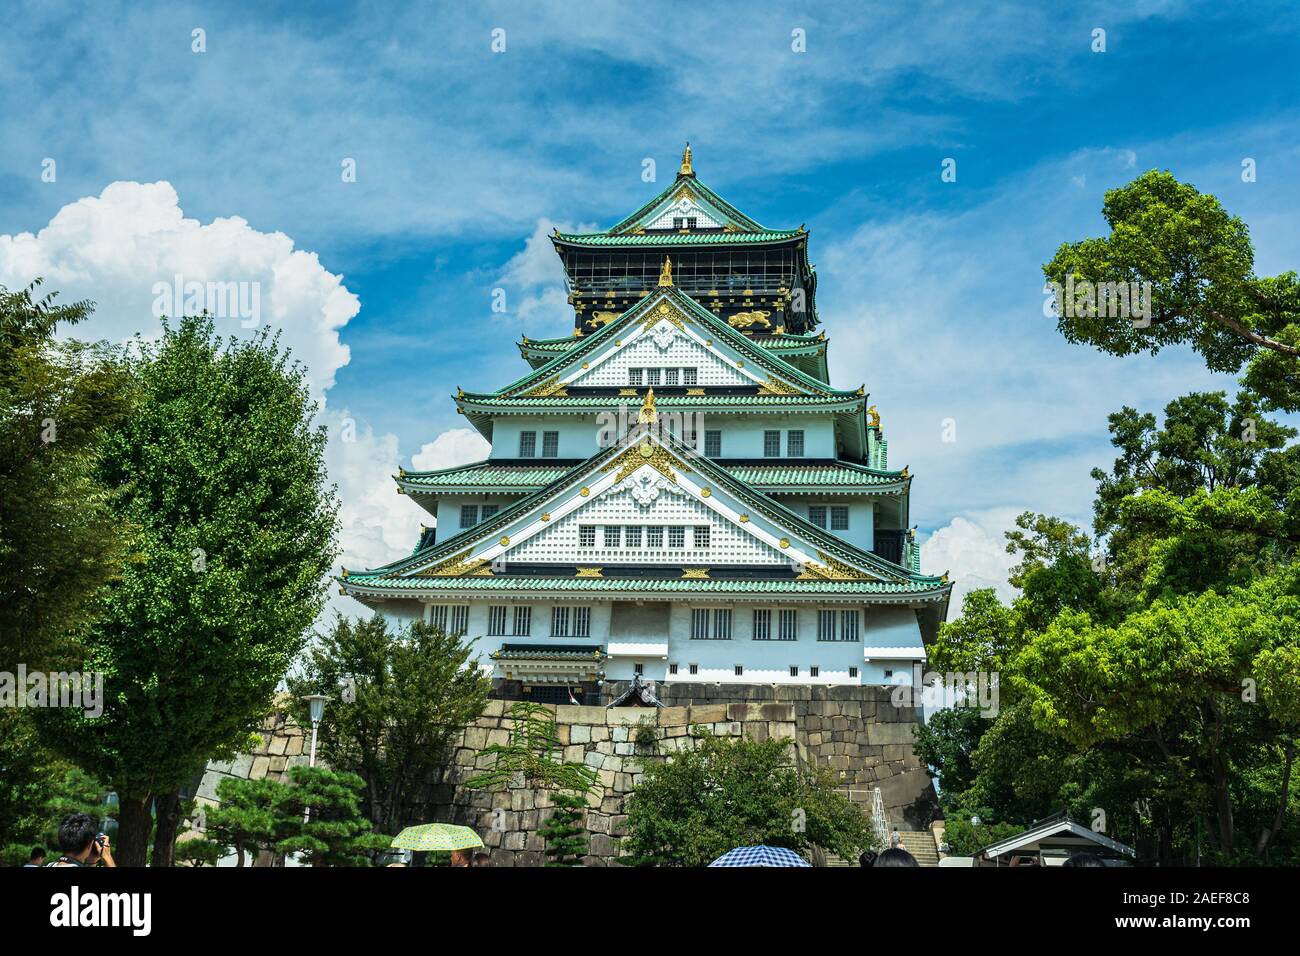 Osaka,Japan, Asia - September 2, 2019 : The Castle of Osaka Stock Photo